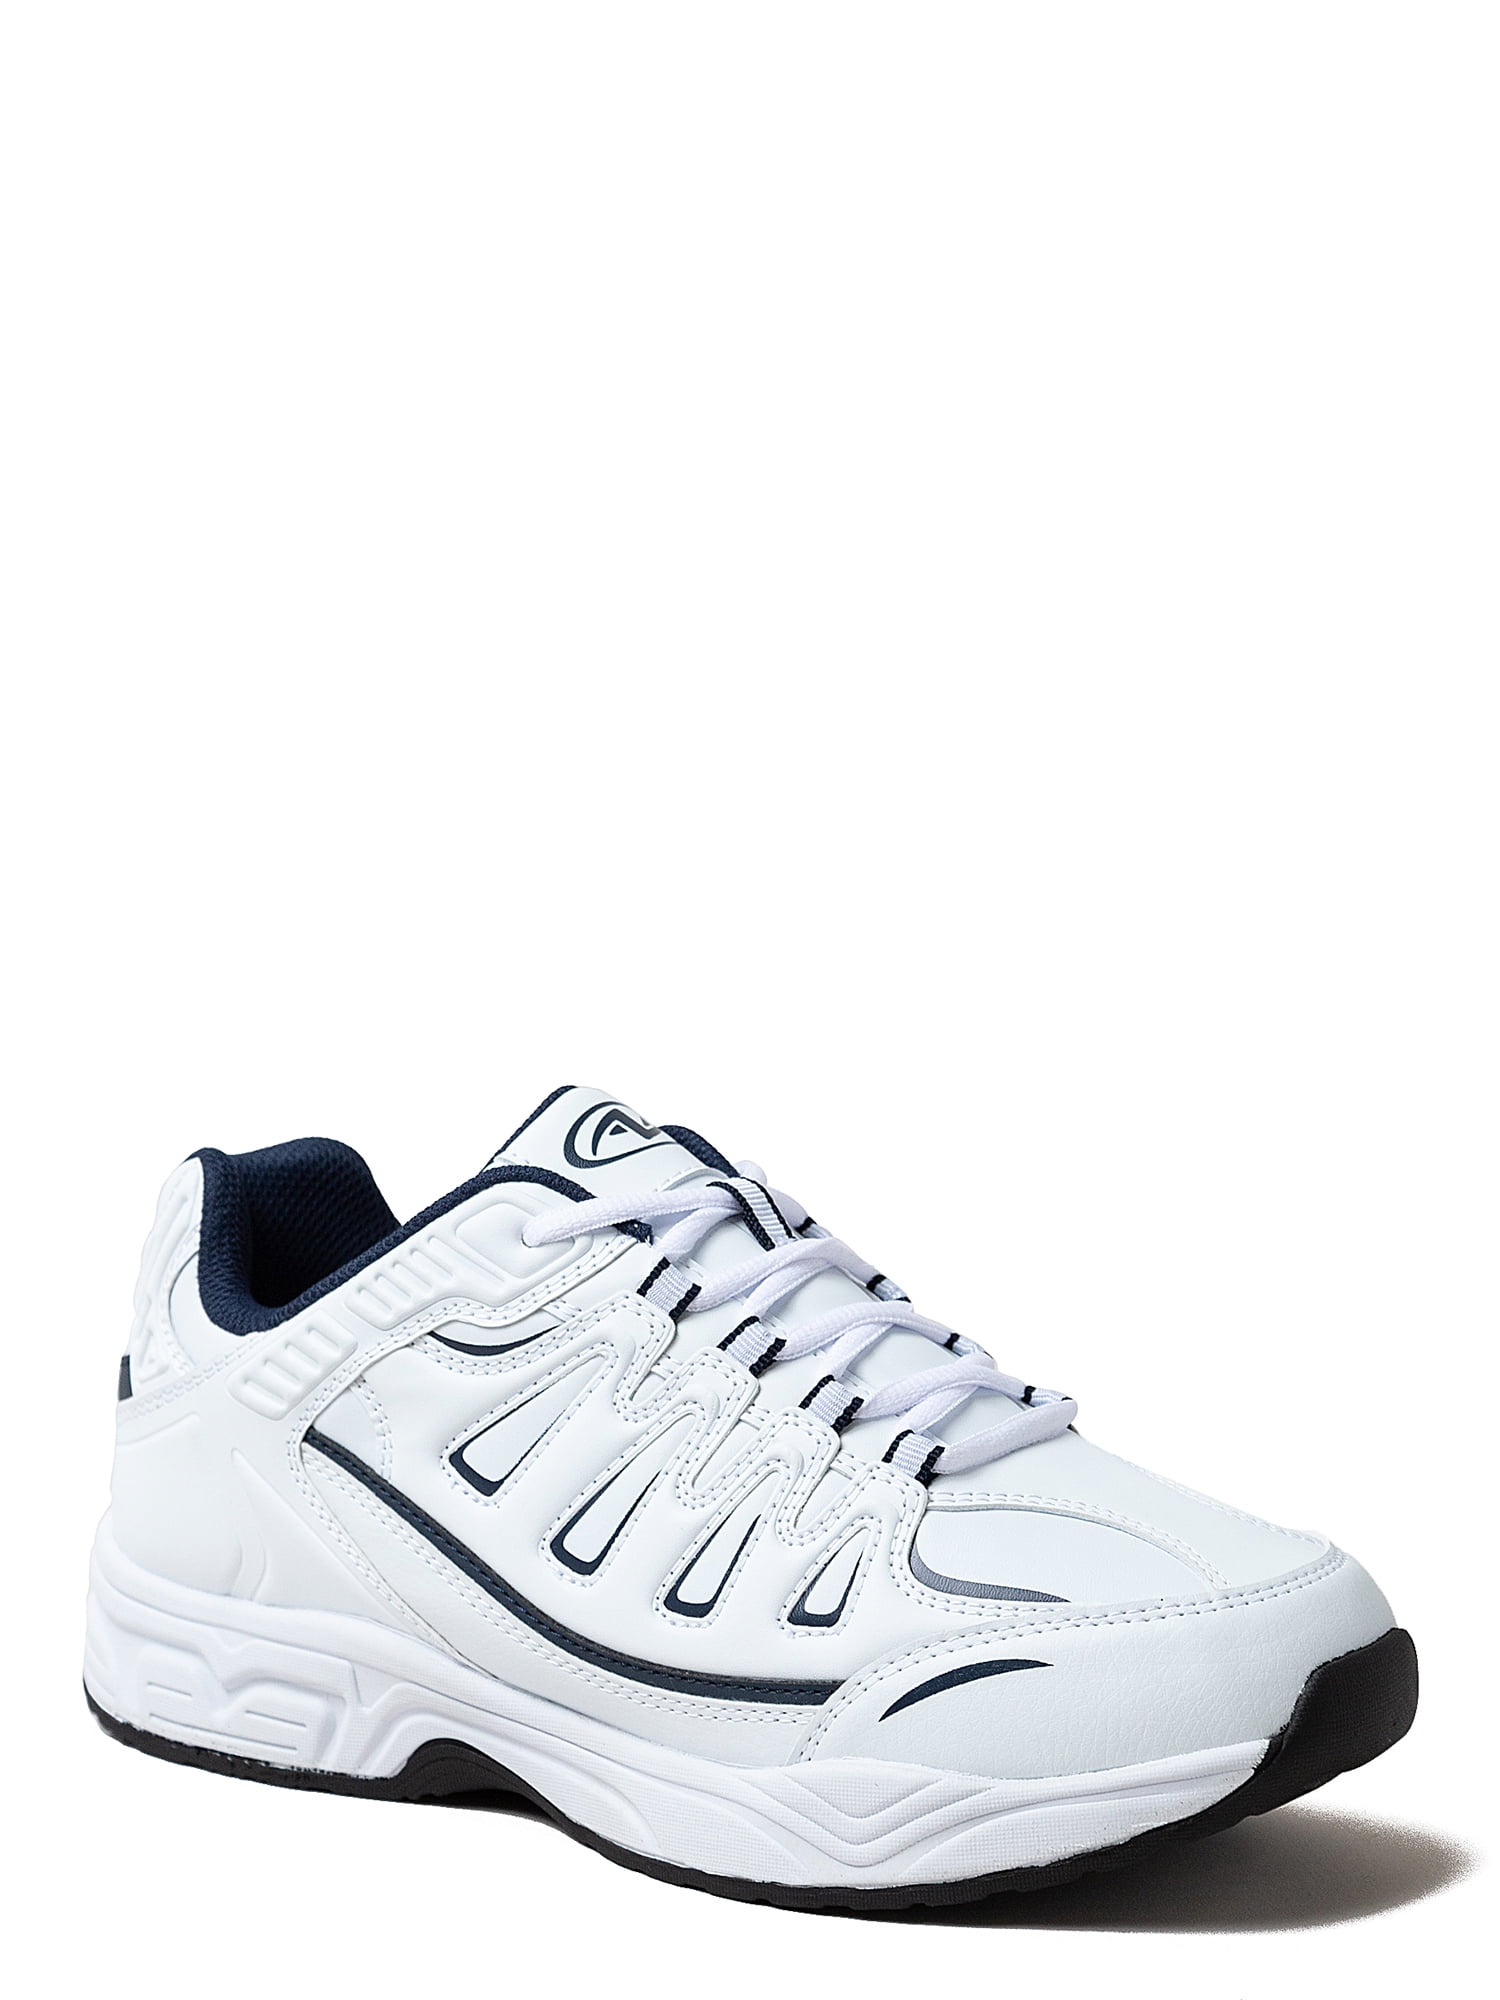 Mens Sneakers \u0026 Athletic - Walmart.com